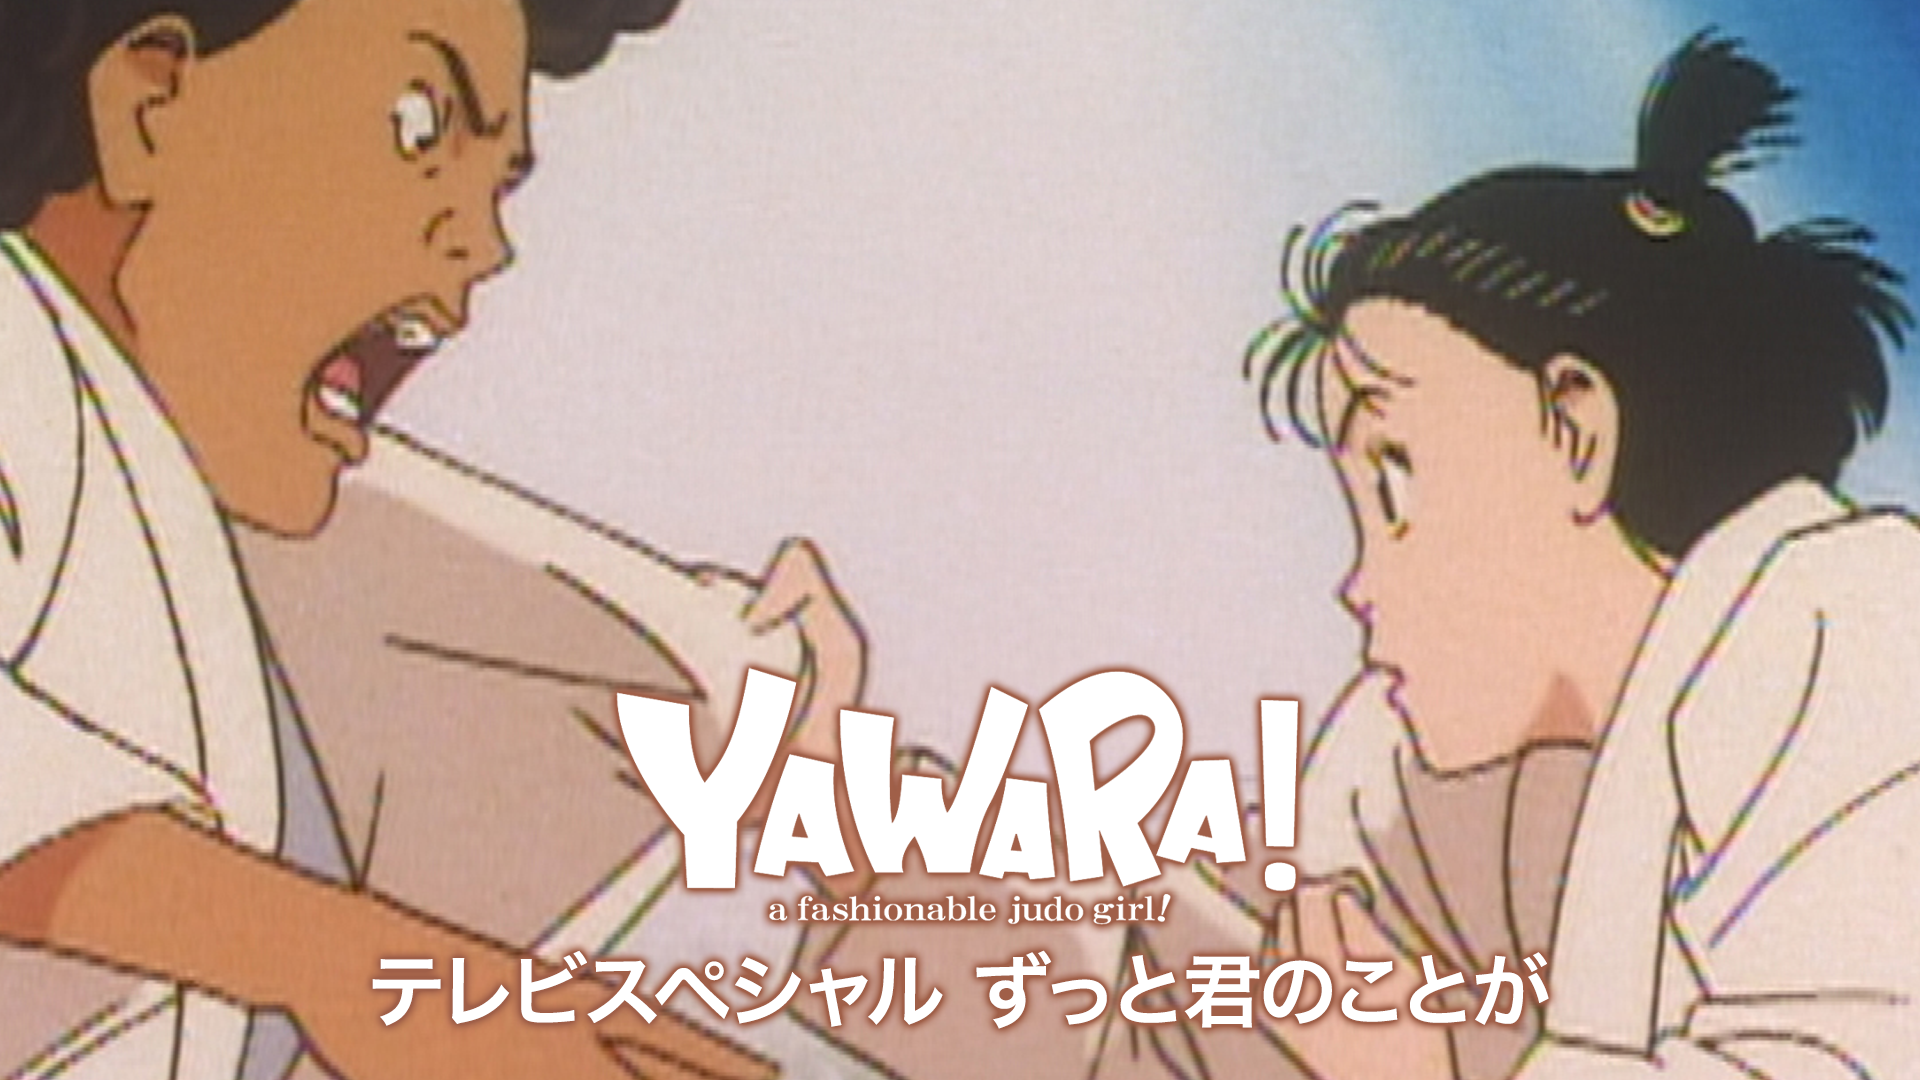 YAWARA!テレビスペシャル ずっと君のことがの動画 - YAWARA!